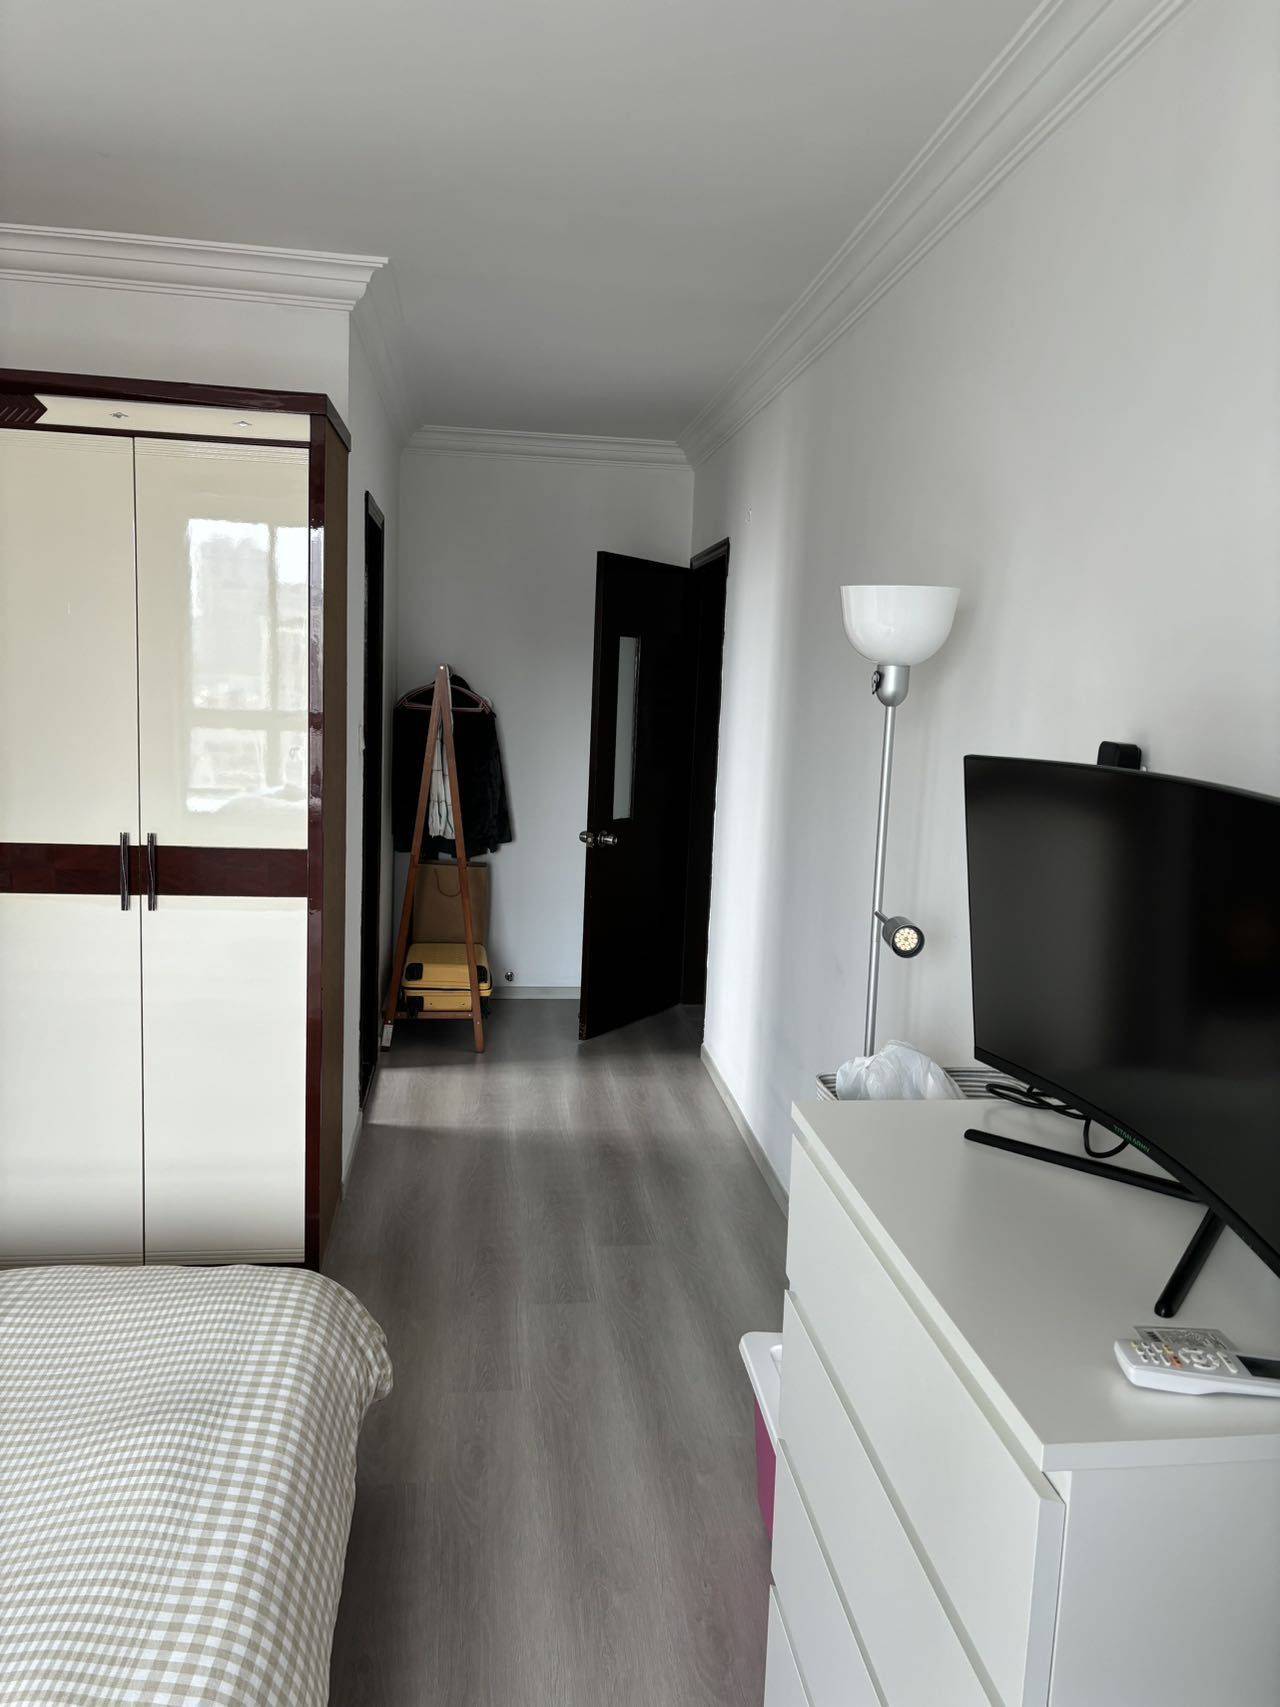 Shanghai-Huangpu-Cozy Home,Clean&Comfy,No Gender Limit,Hustle & Bustle,“Friends”